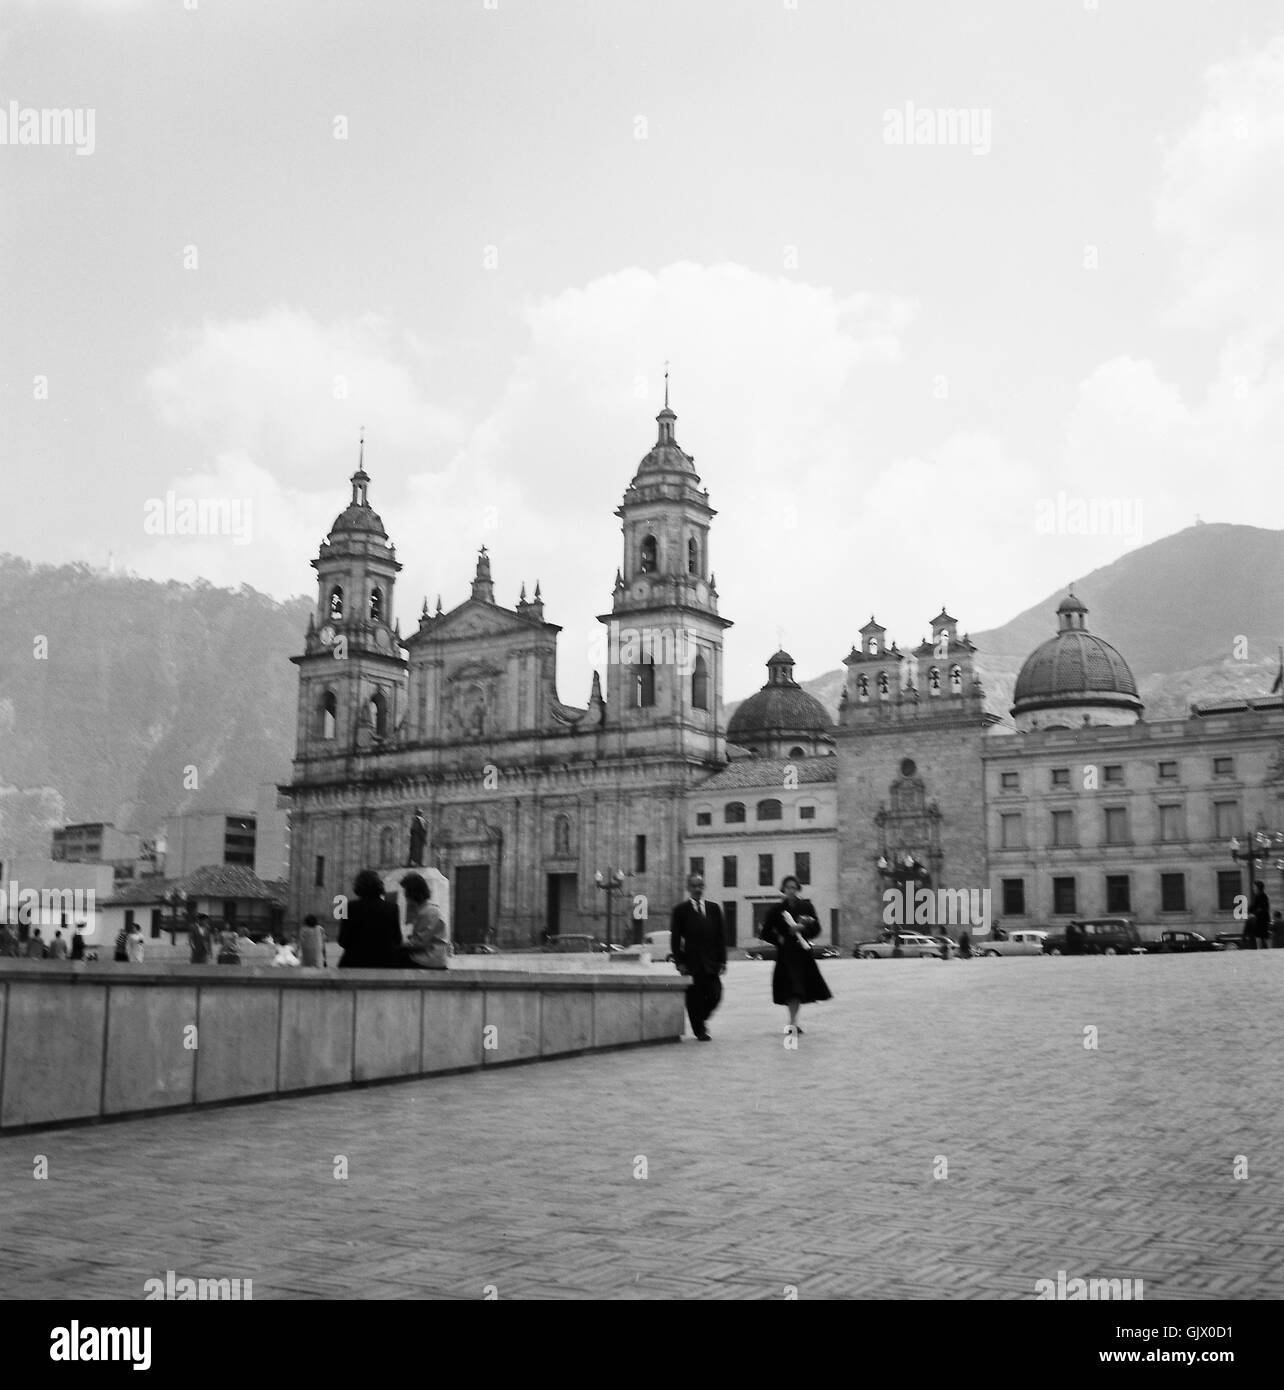 Die Kathedrale von Bogotà, Kolumbien 1960er Jahre. La Cattedrale di Bogotà, Colombia 1960s. Foto Stock